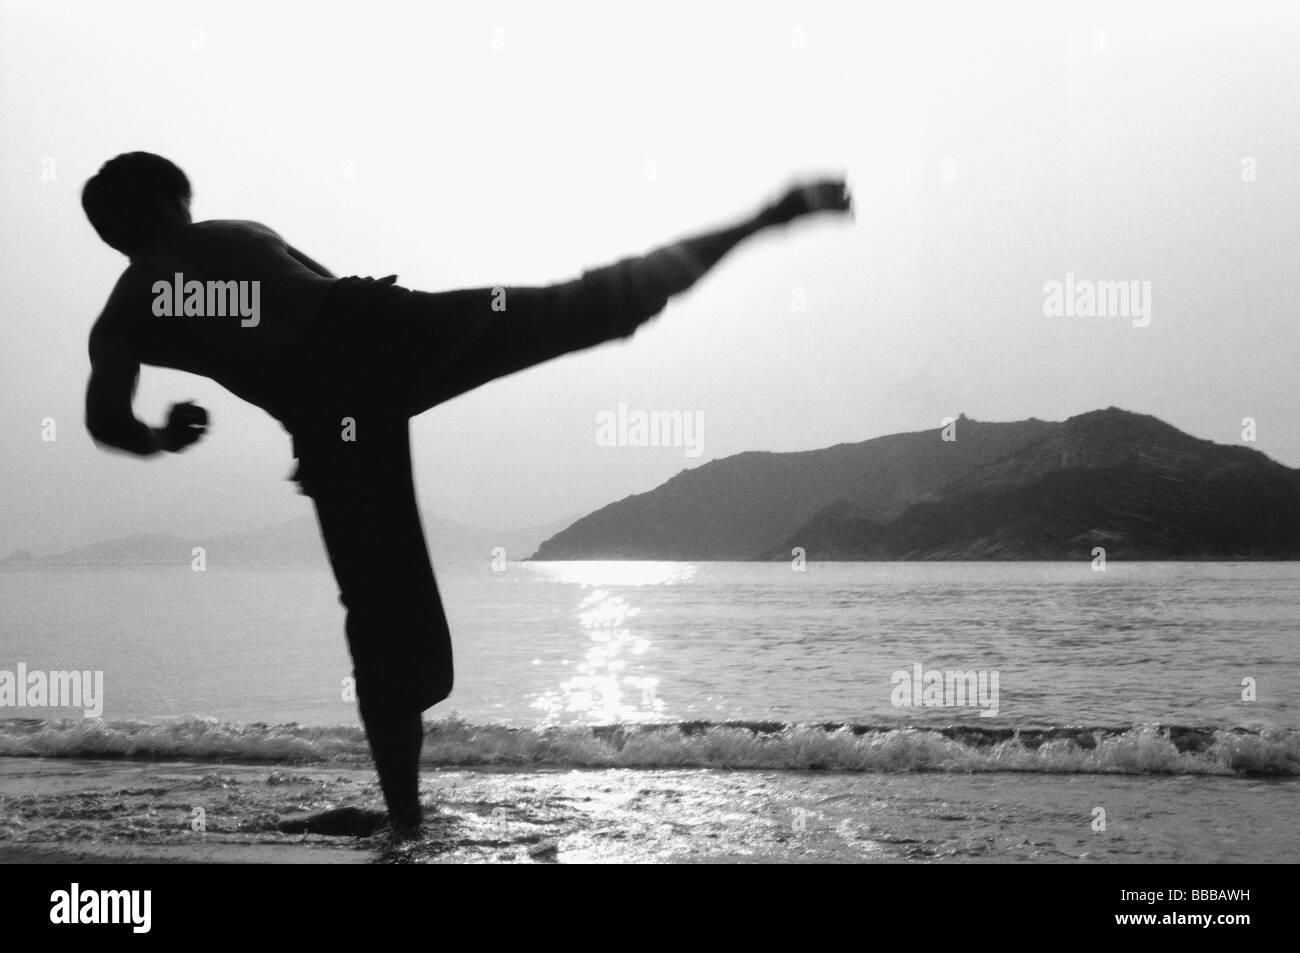 Man kicking in Kung Fu (Wu Shu) pose on beach, silhouette Stock Photo